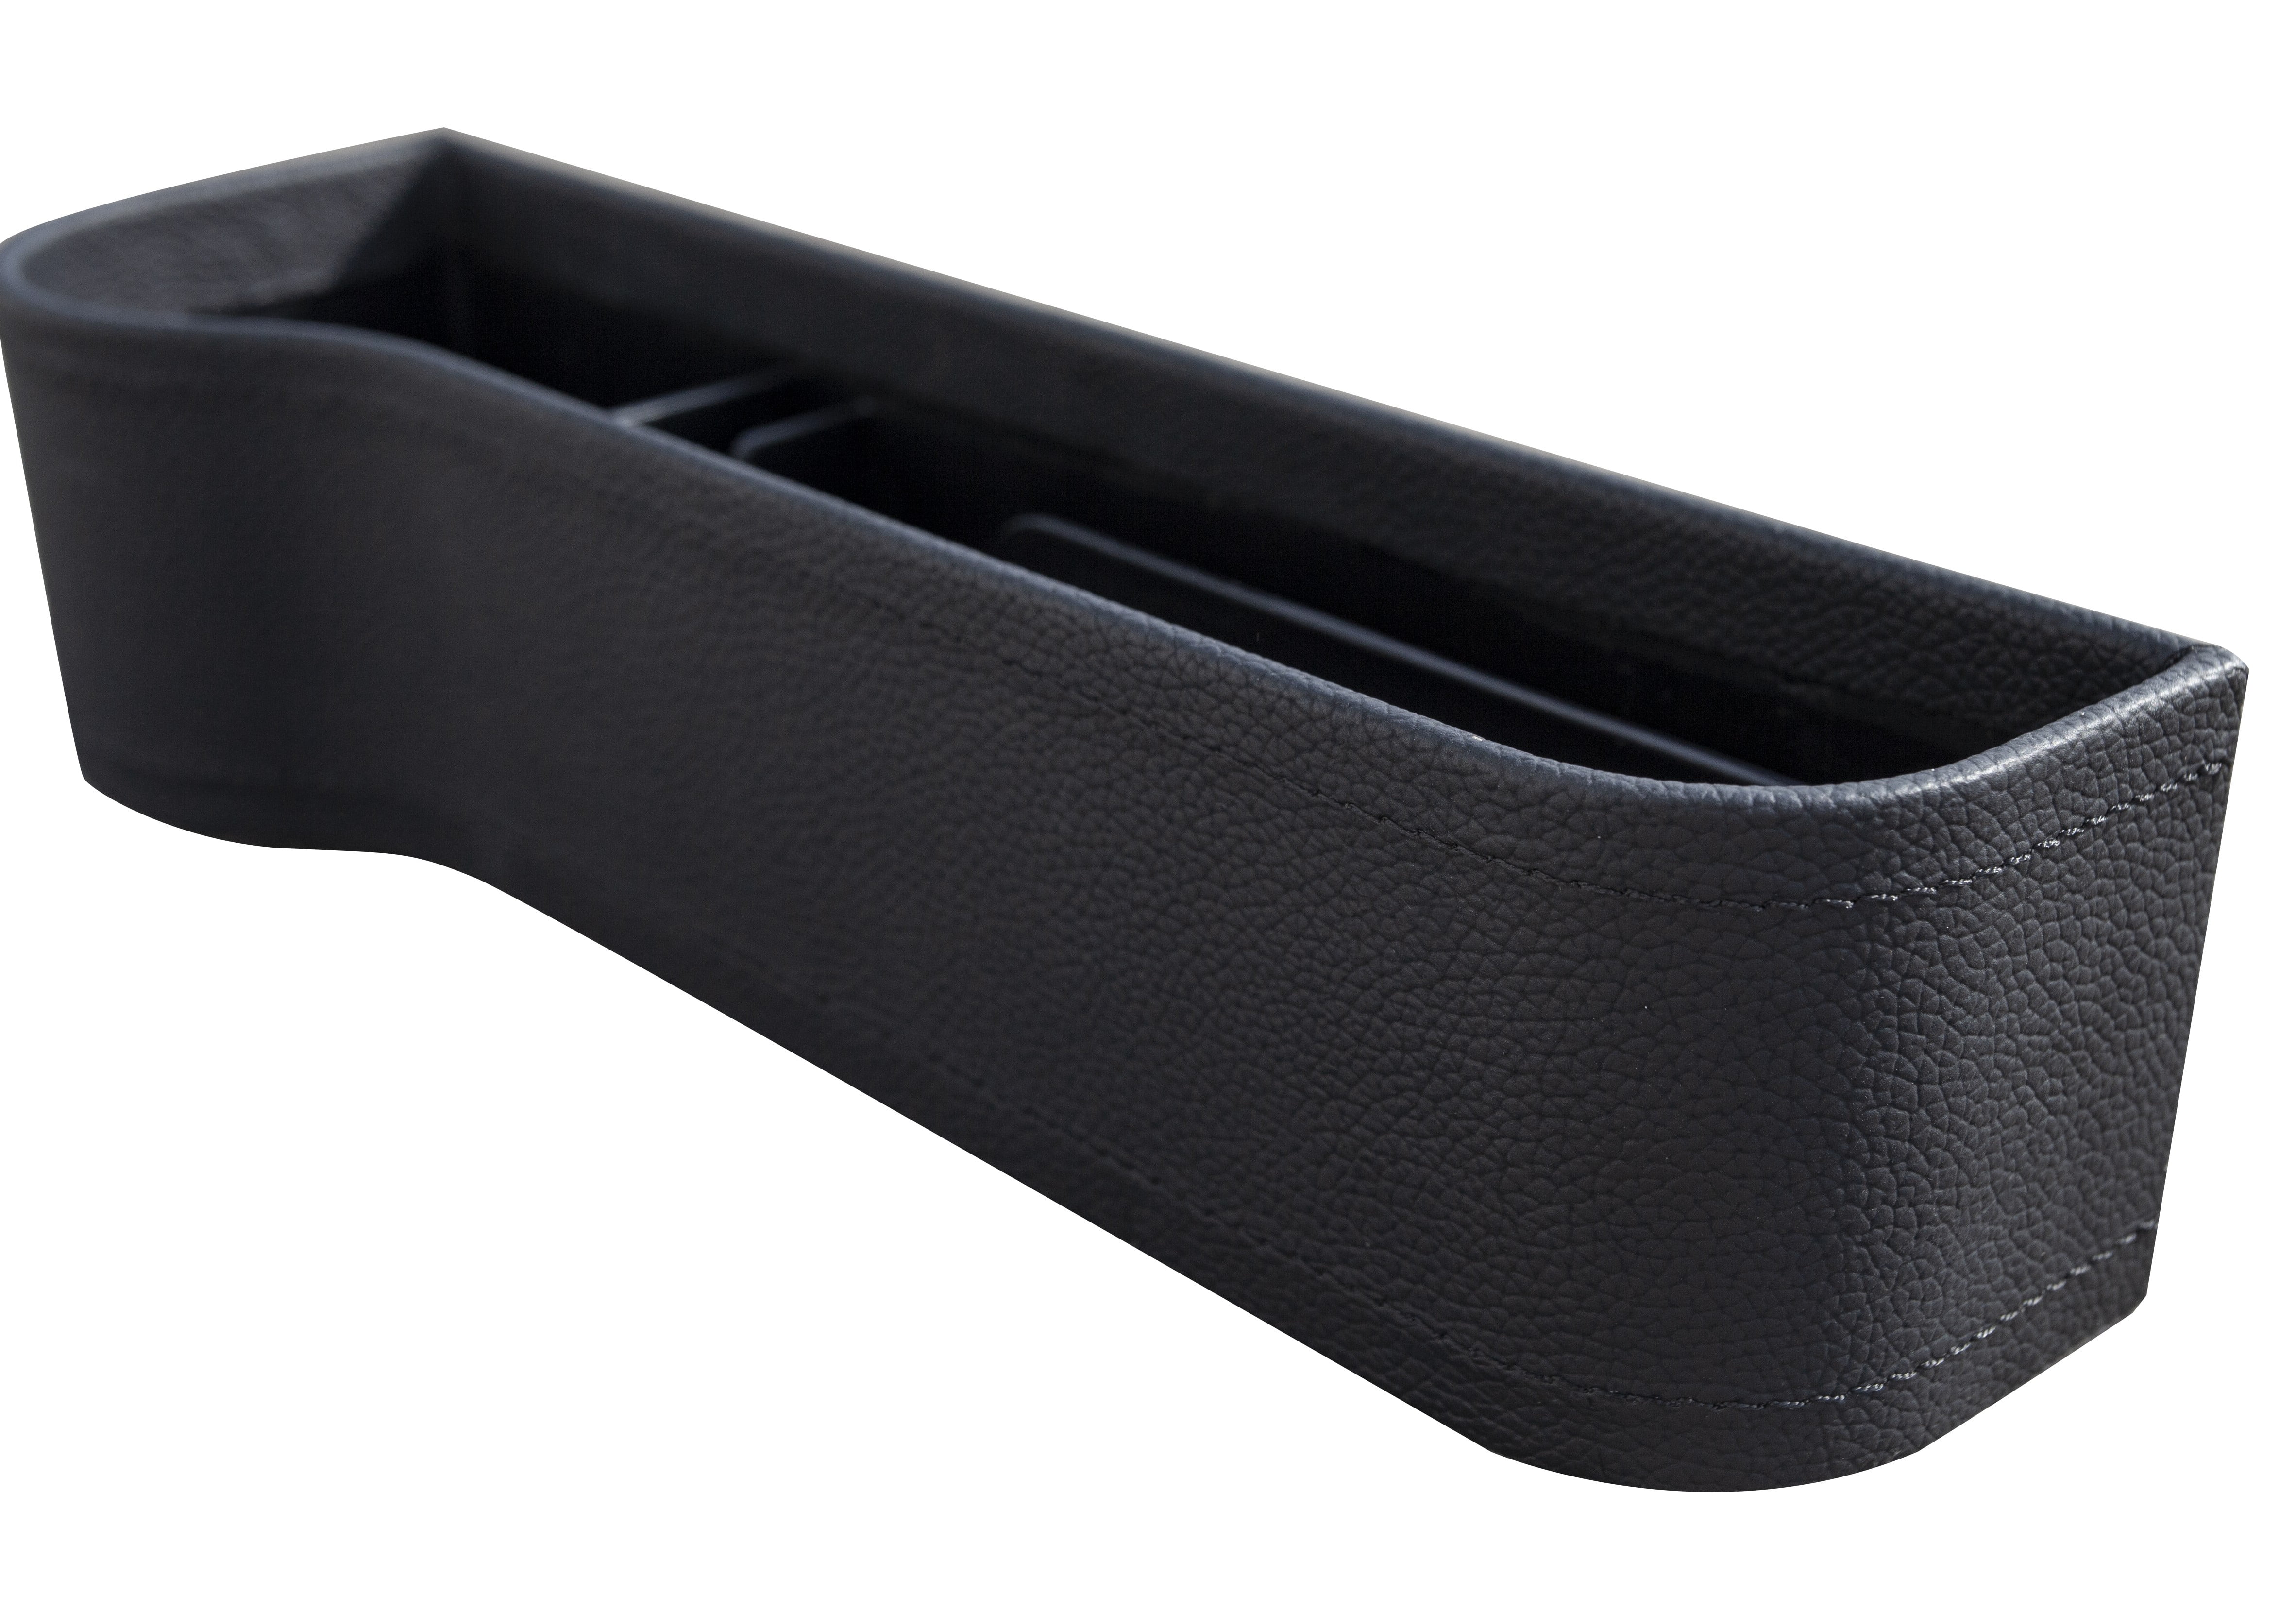 Auto Drive Black Premium Storage Bag Universal Fit on Car&Vehicle's  Seatback 1 Pack, L10x W7x H12